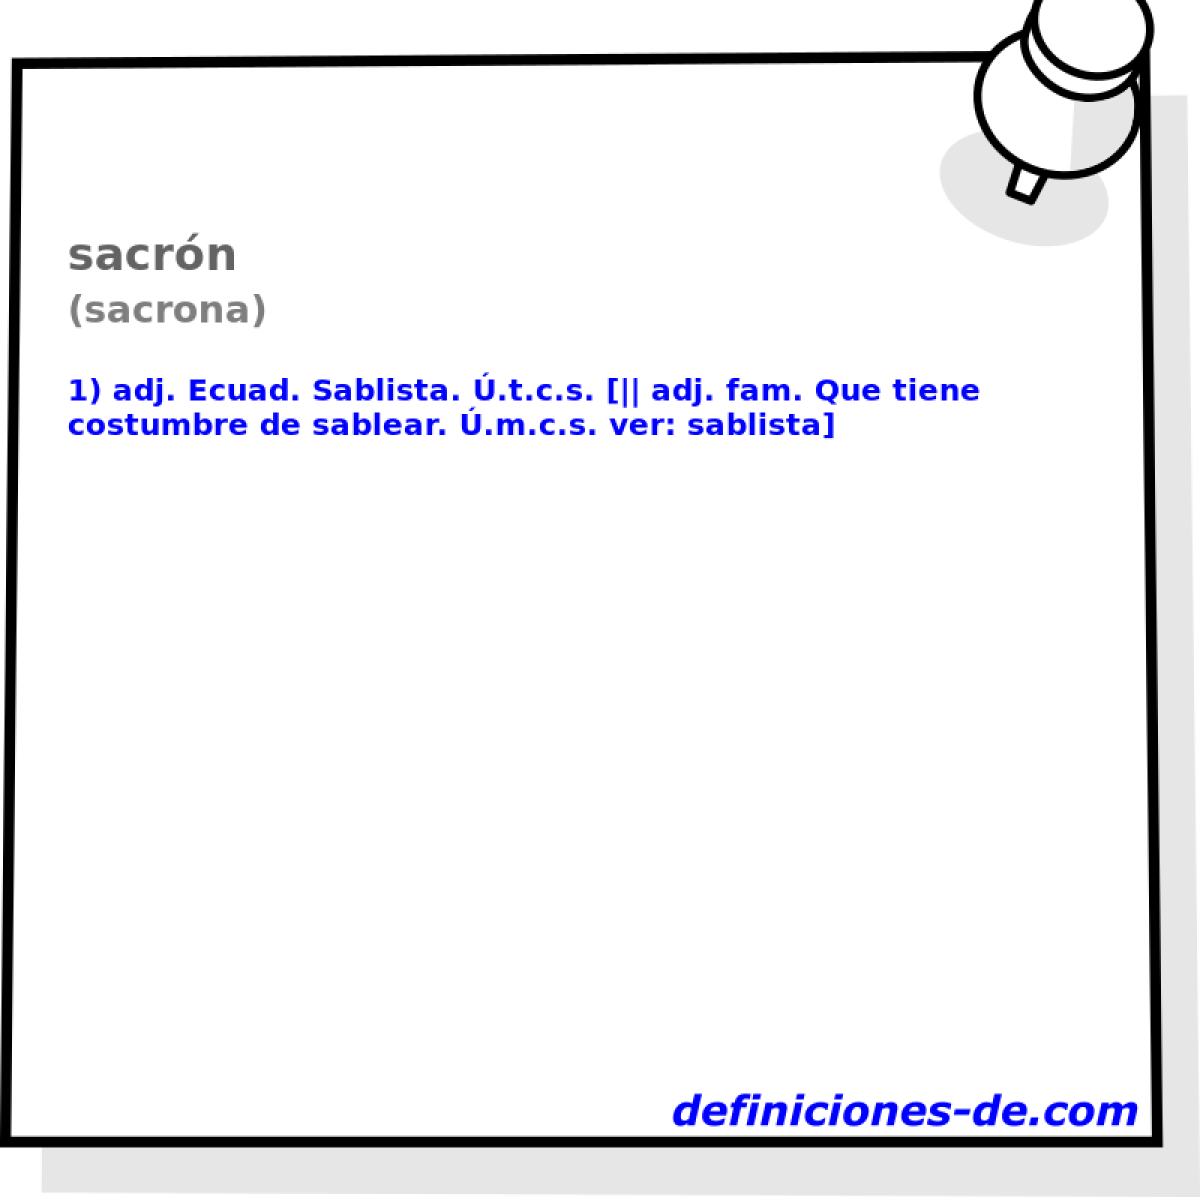 sacrn (sacrona)